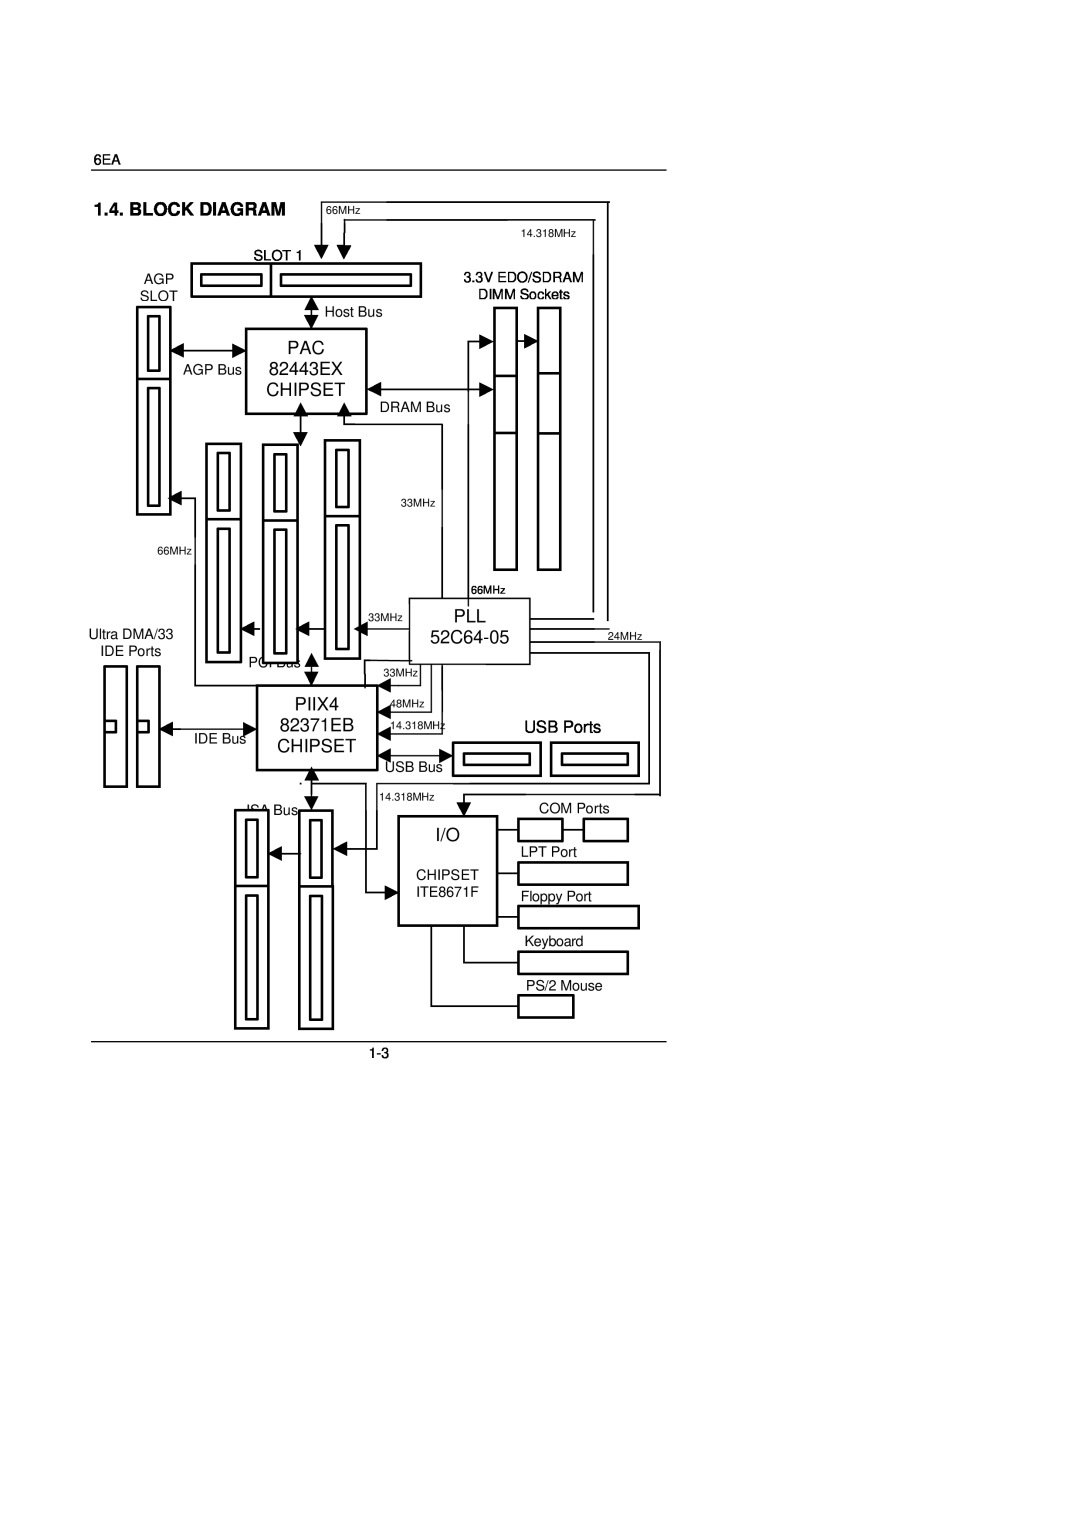 Gigabyte 6EA manual Block Diagram, Chipset, 52C64-05, PIIX4, 82371EB 